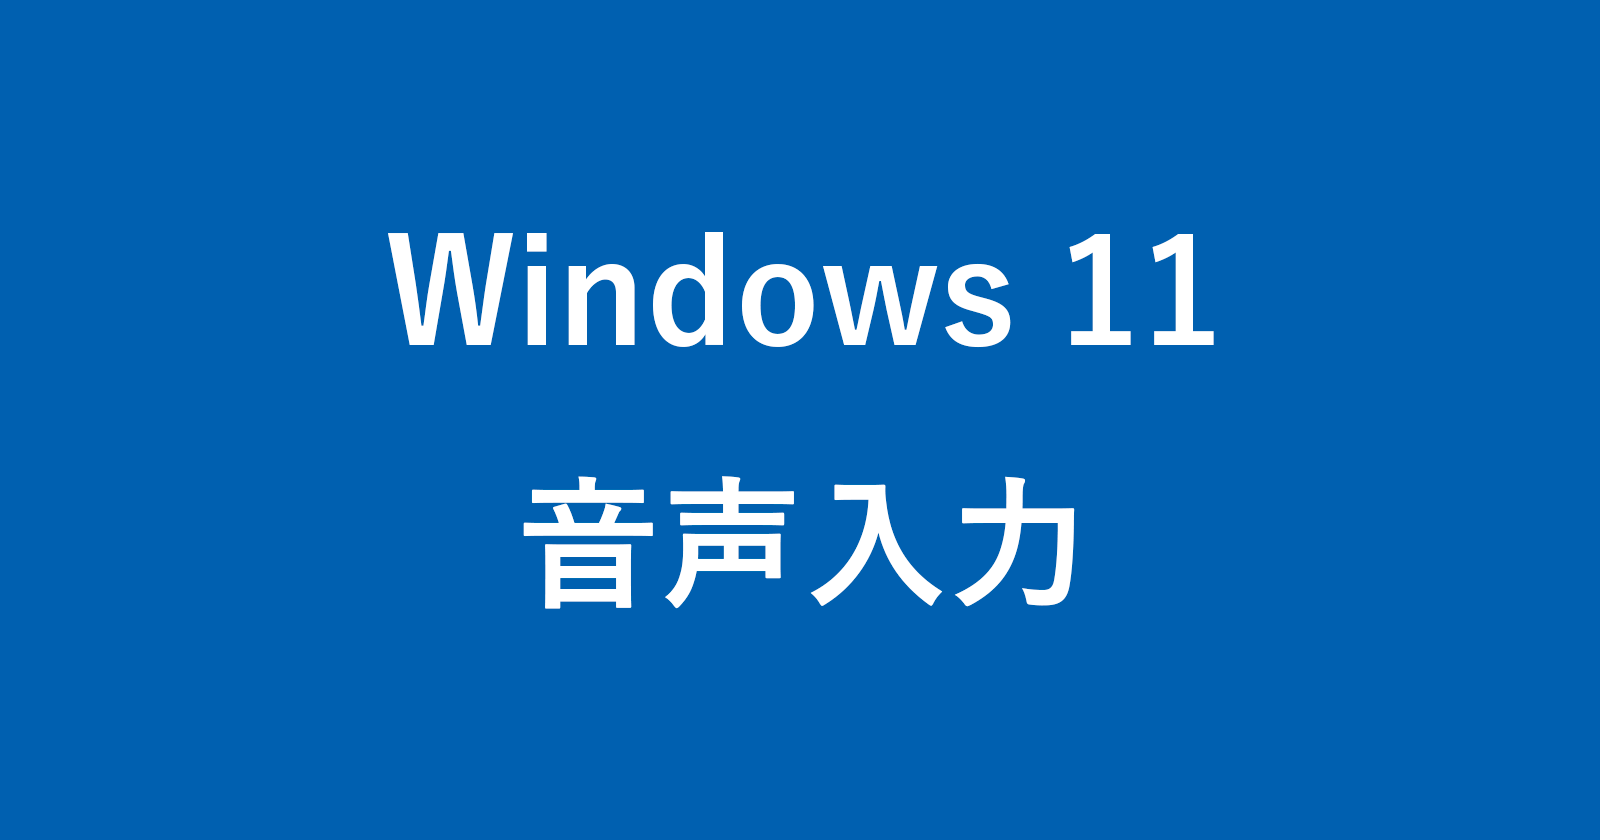 windows 11 voice input